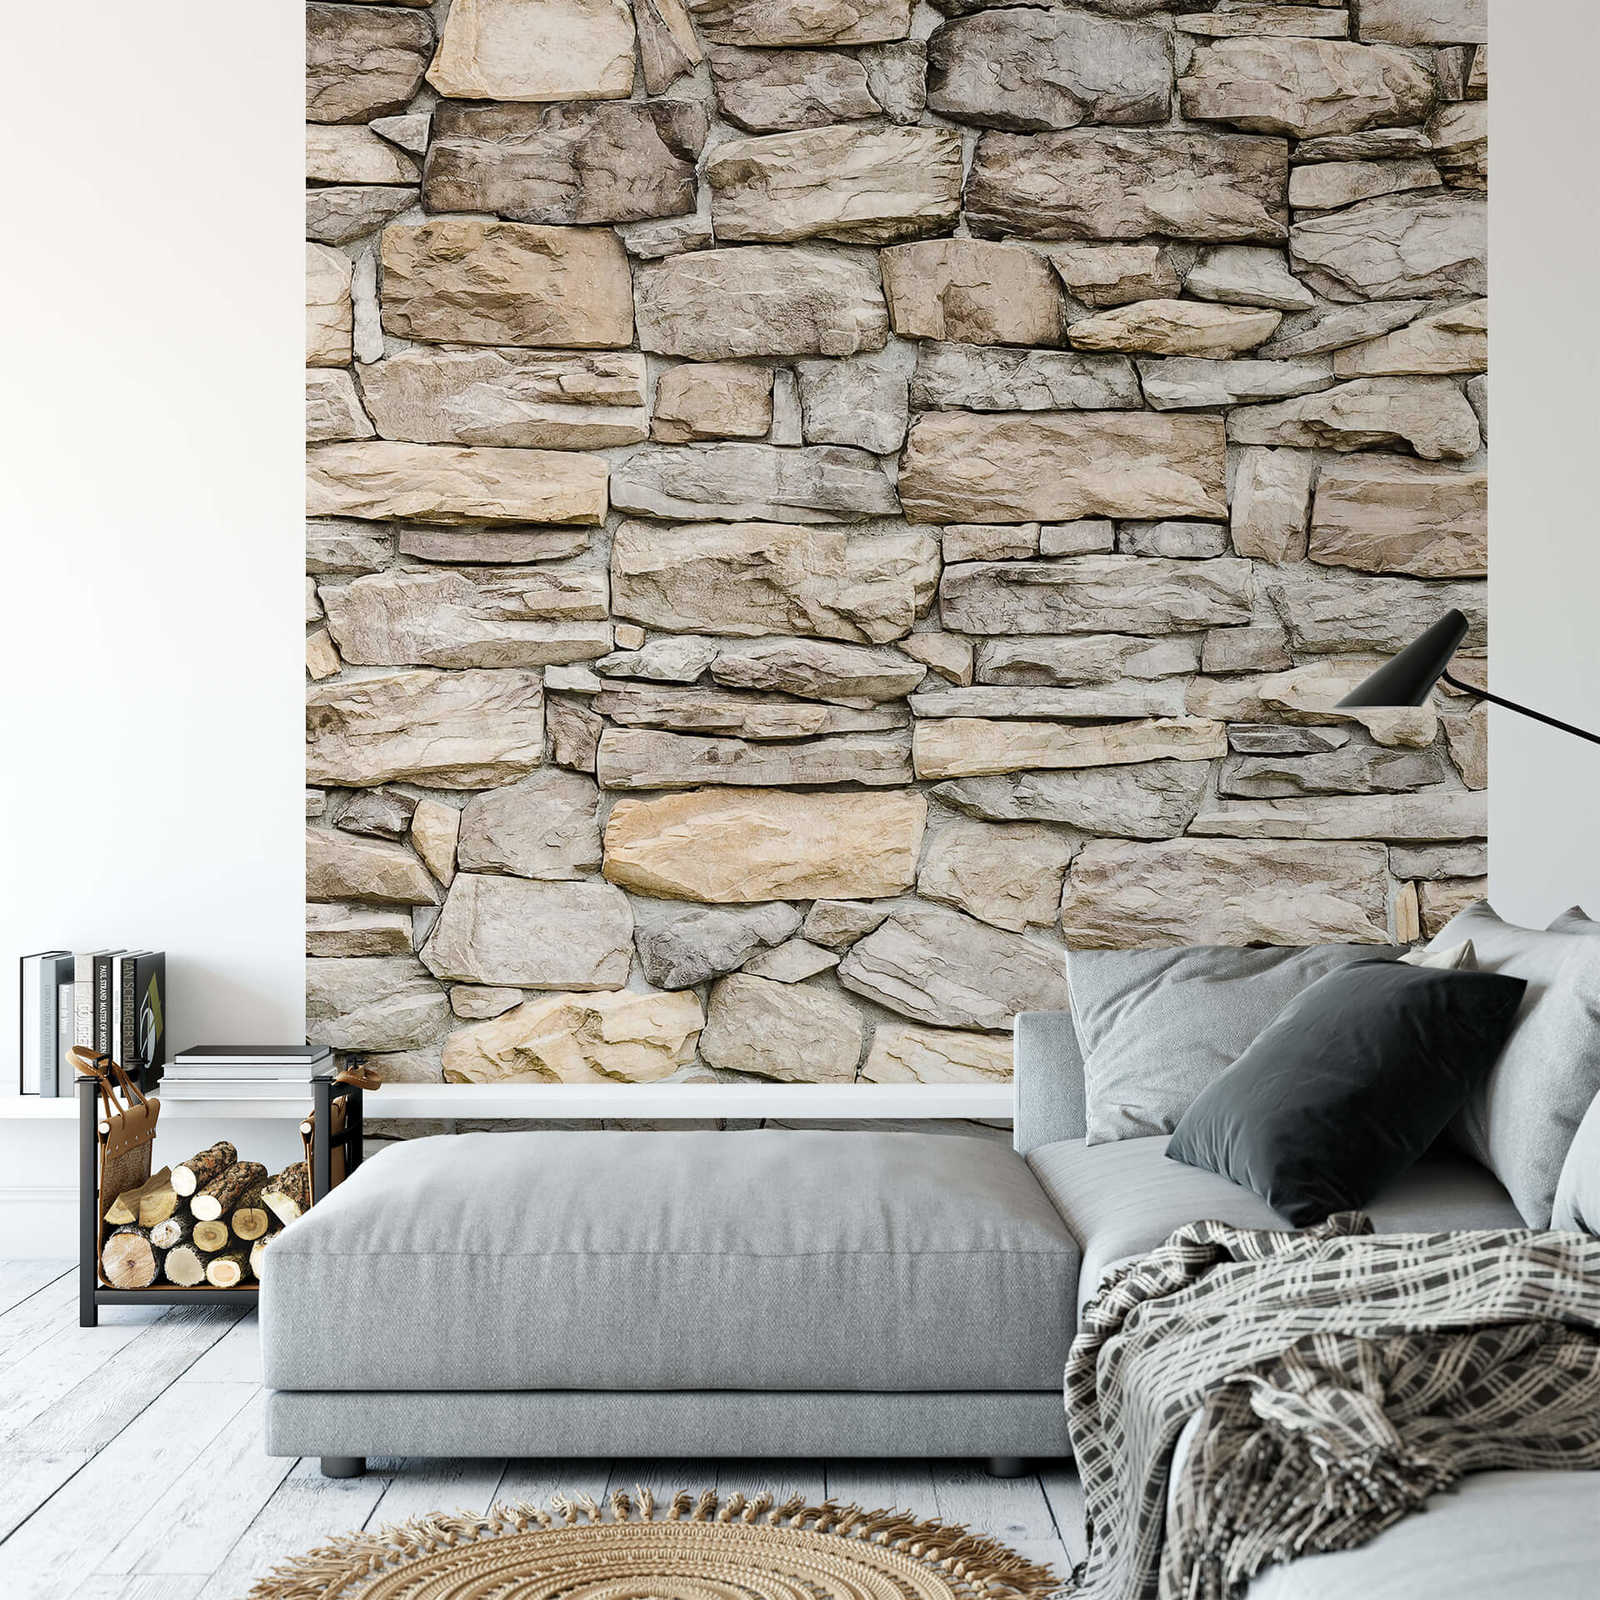             Narrow Wall Stone Behang - Grijs, Bruin
        